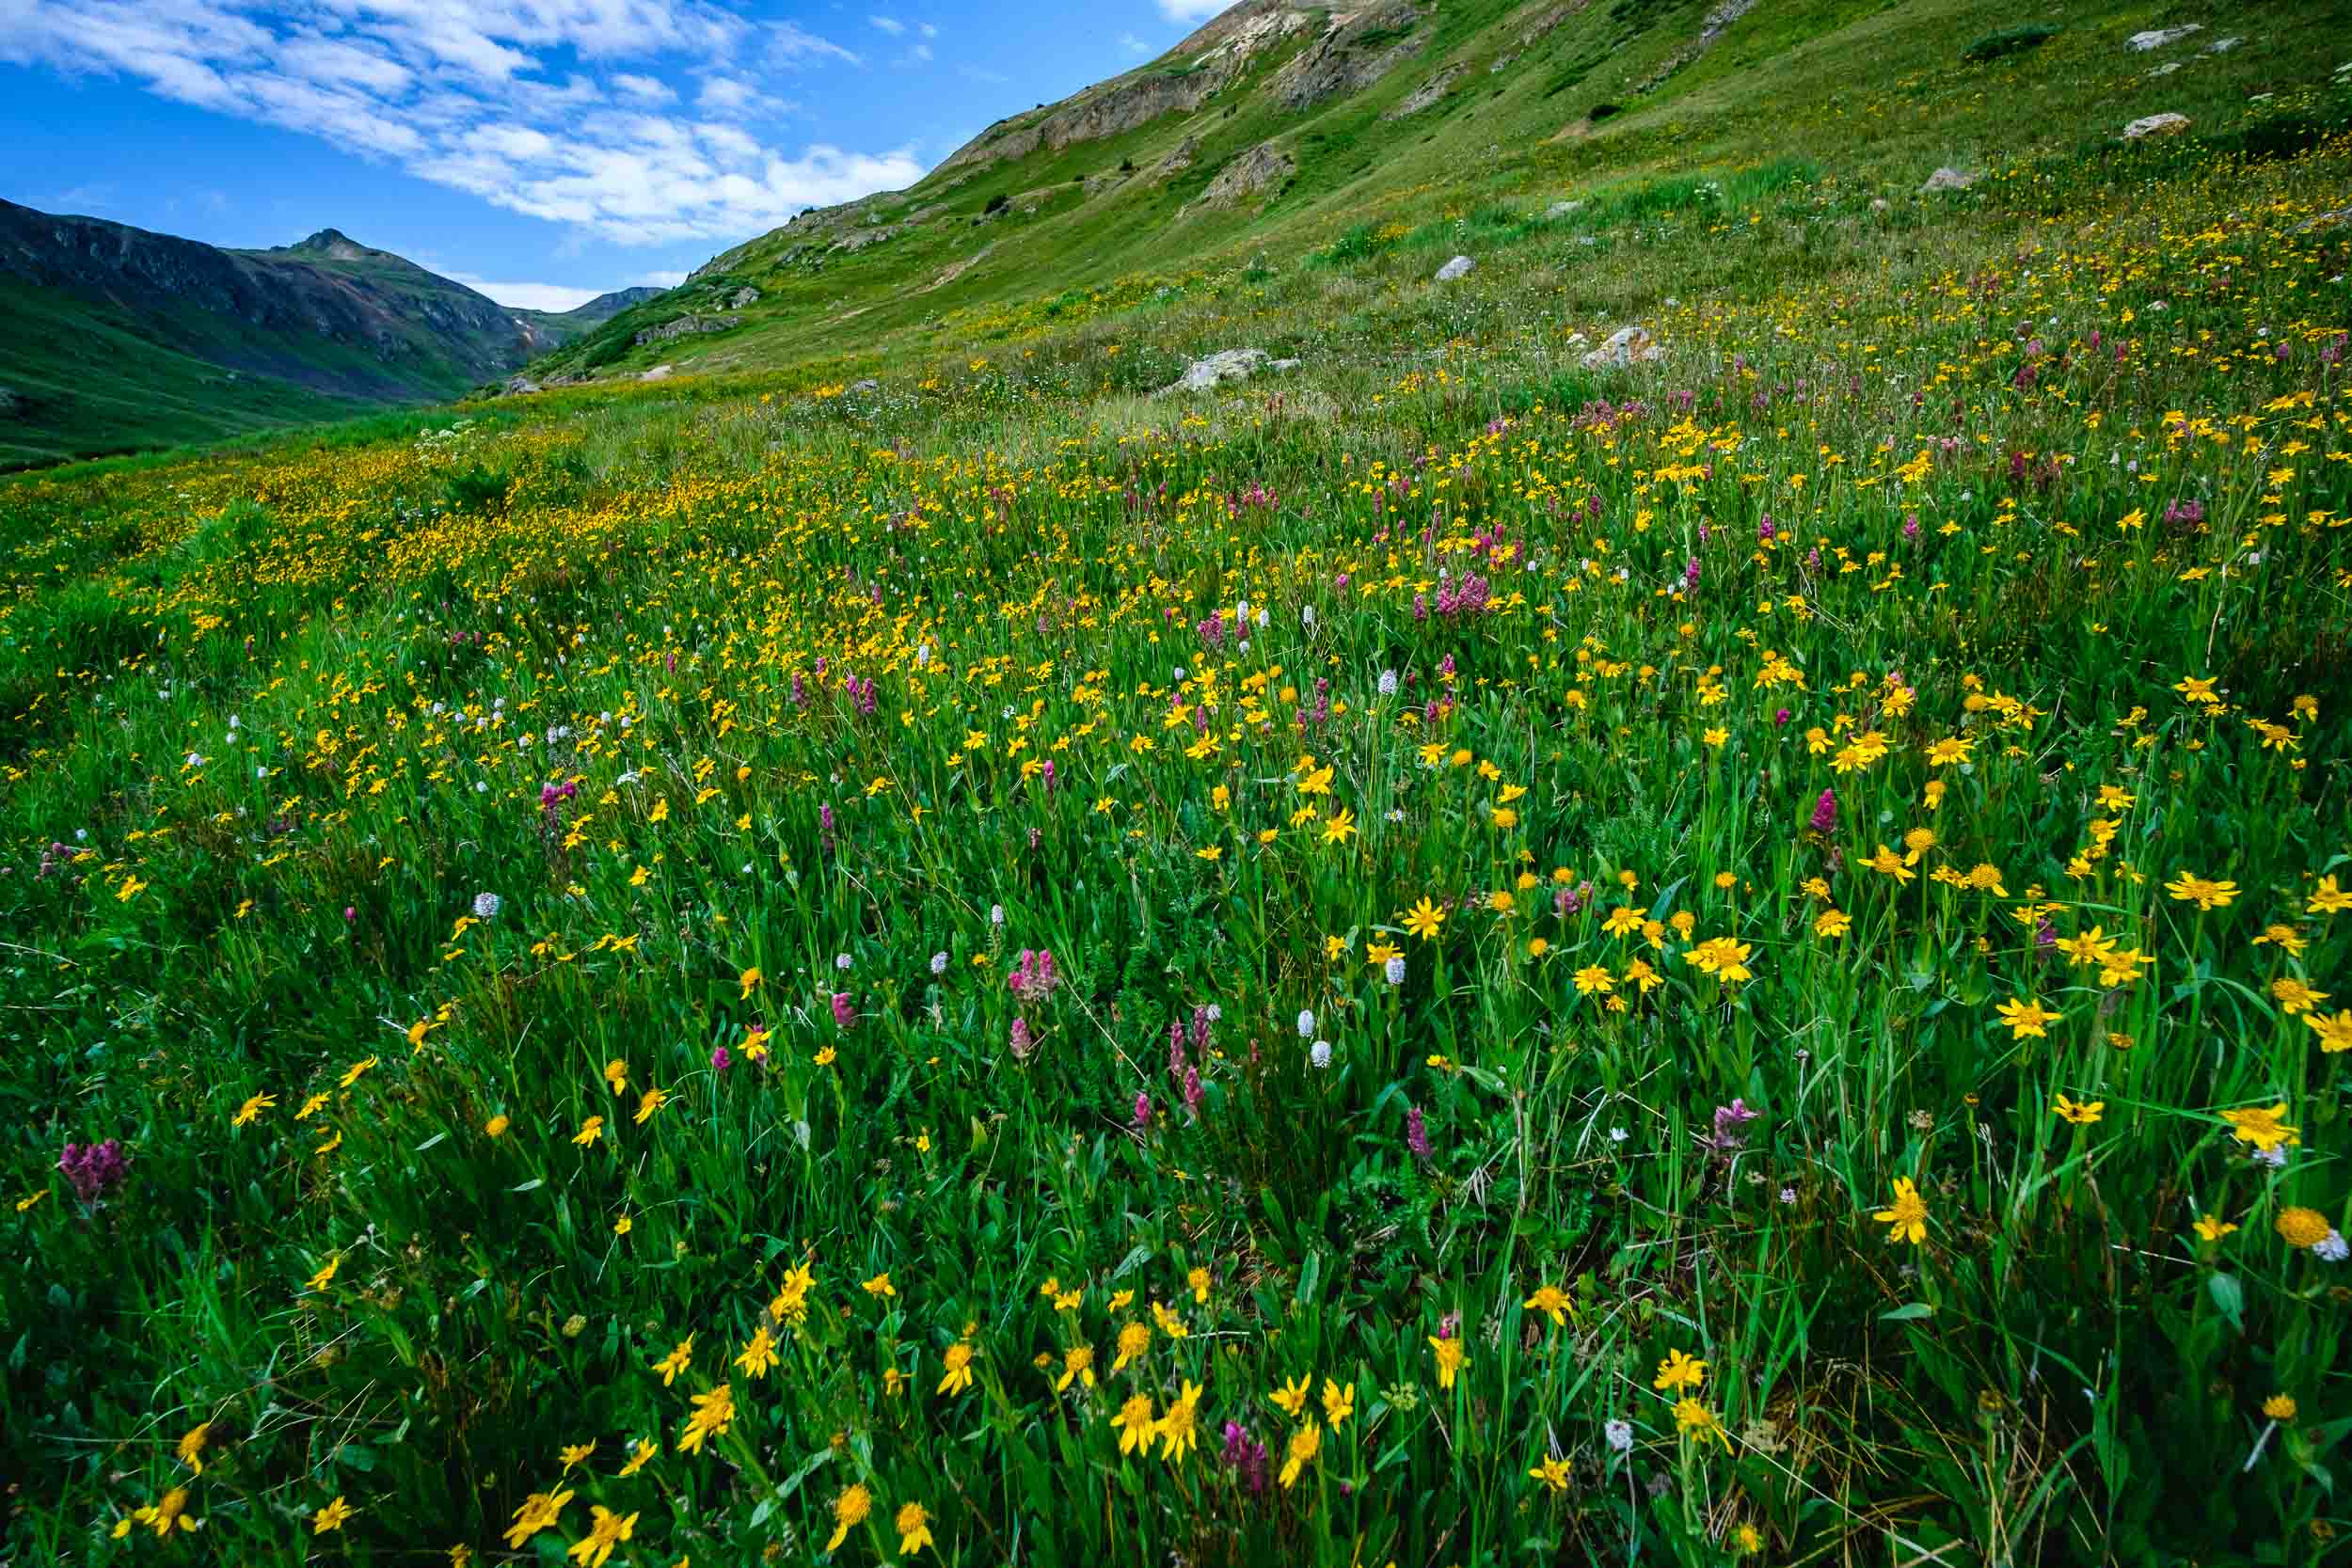  Wildflowers along Placer Gulch in the San Juan Mountains - Fuji XT2, Rokinon 12mm f/2 